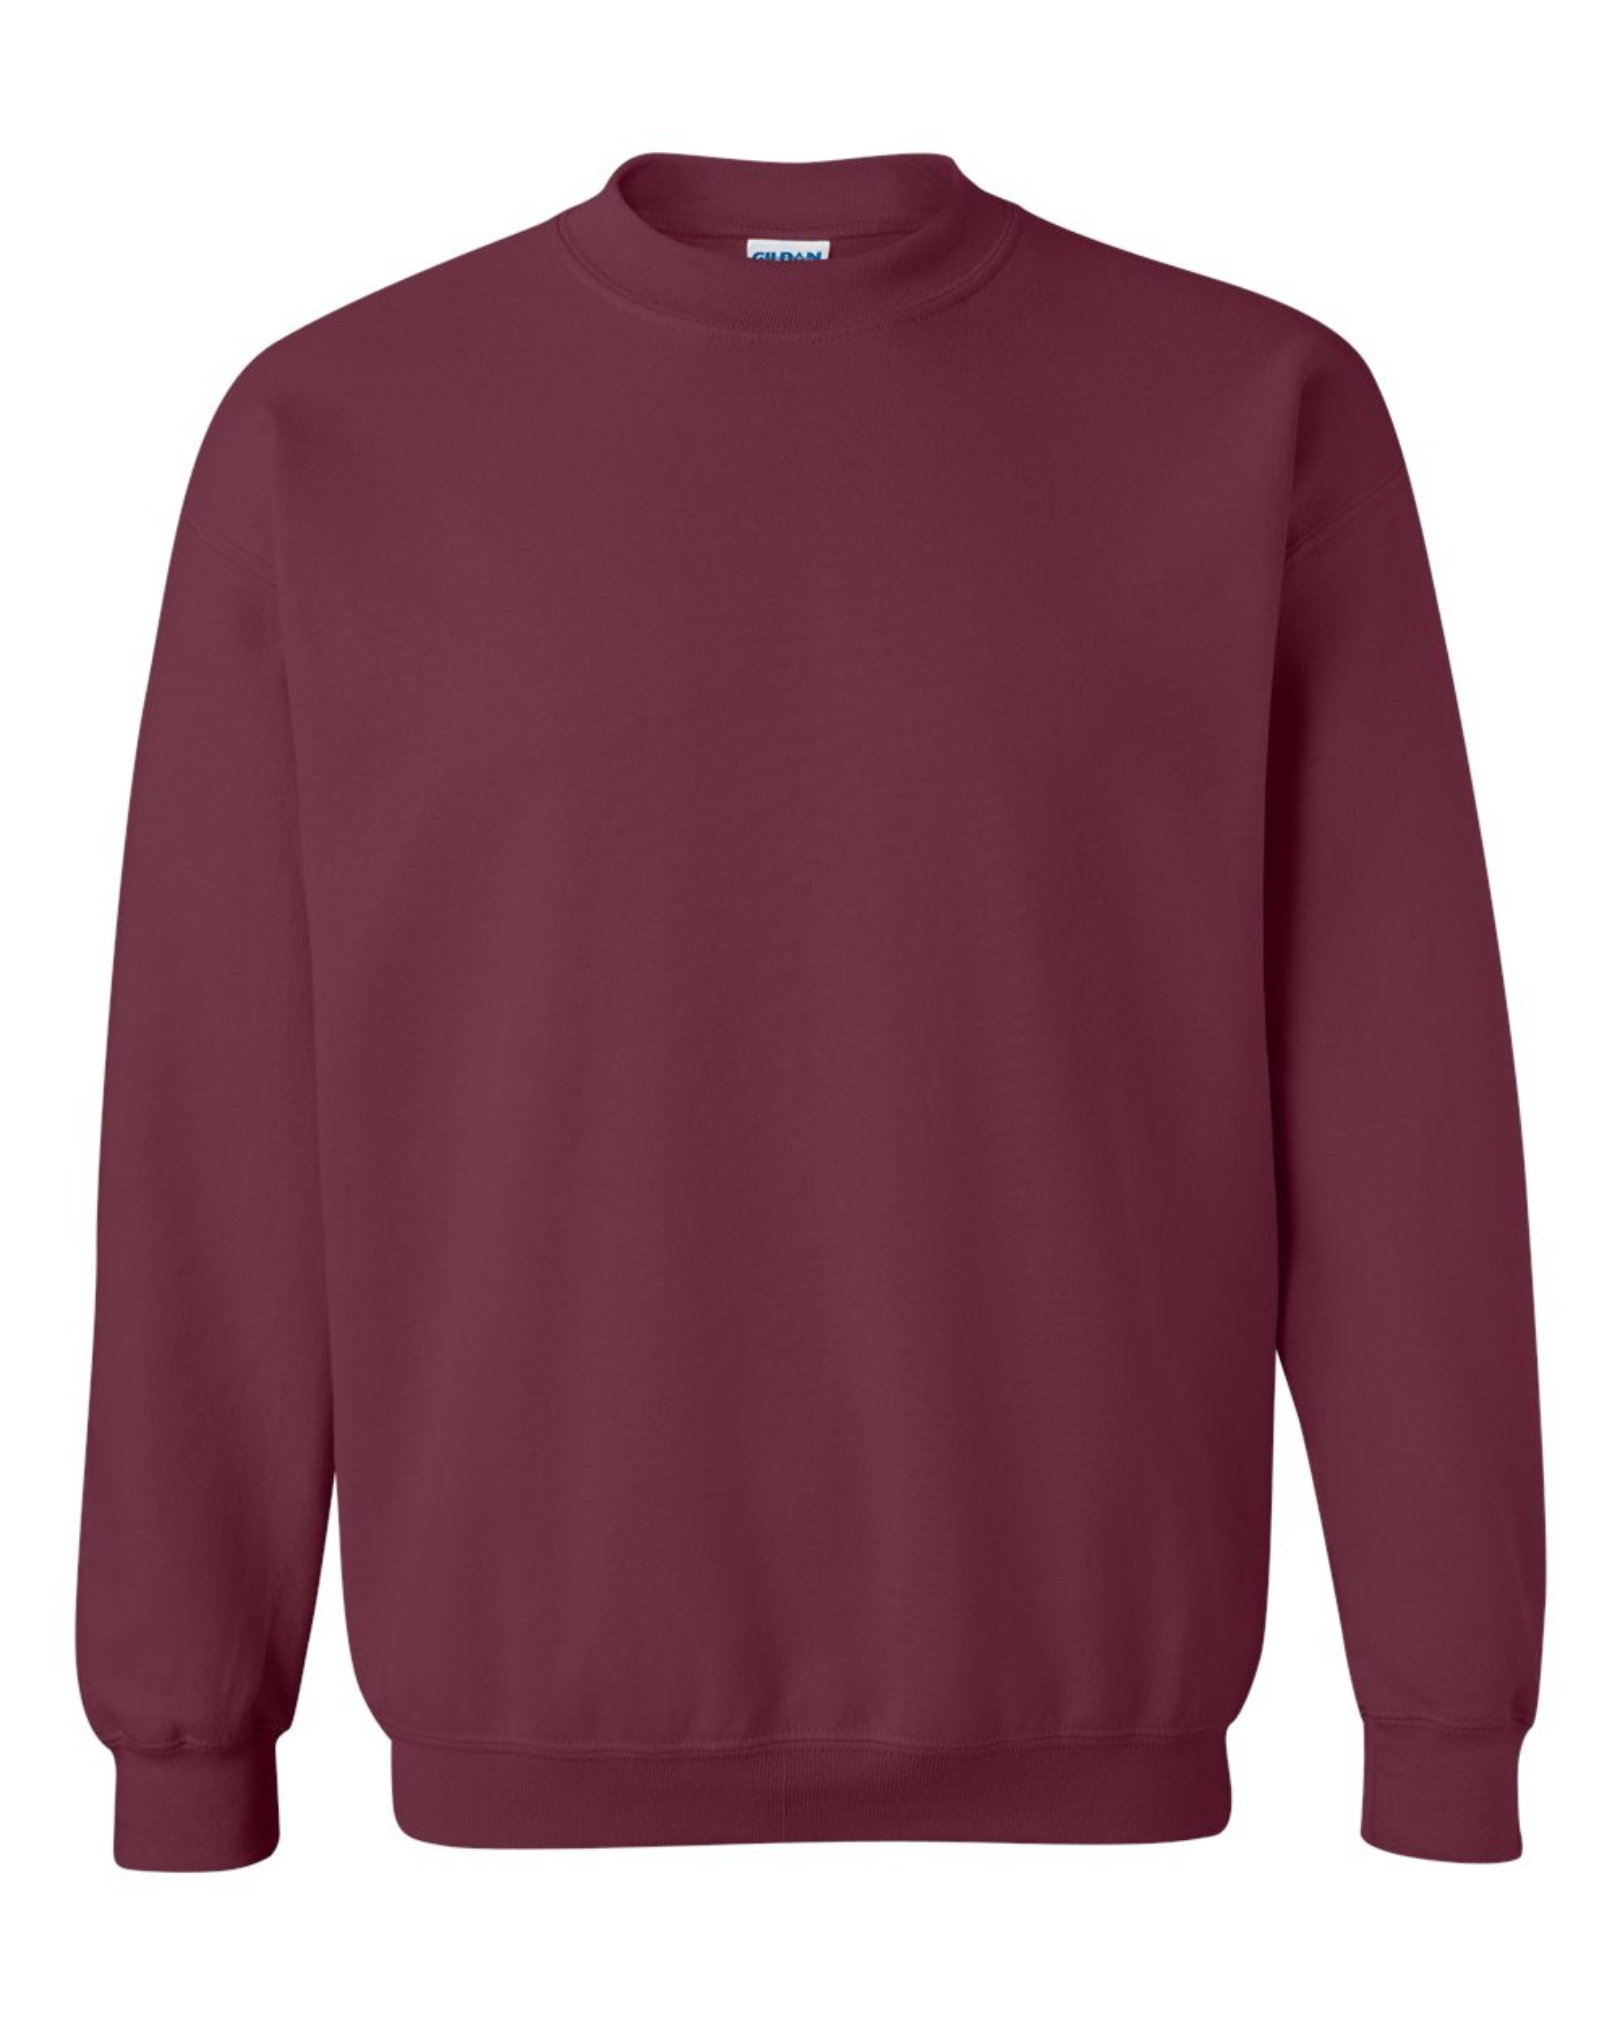 Adult Crewneck Sweatshirt - Cotton Maroon